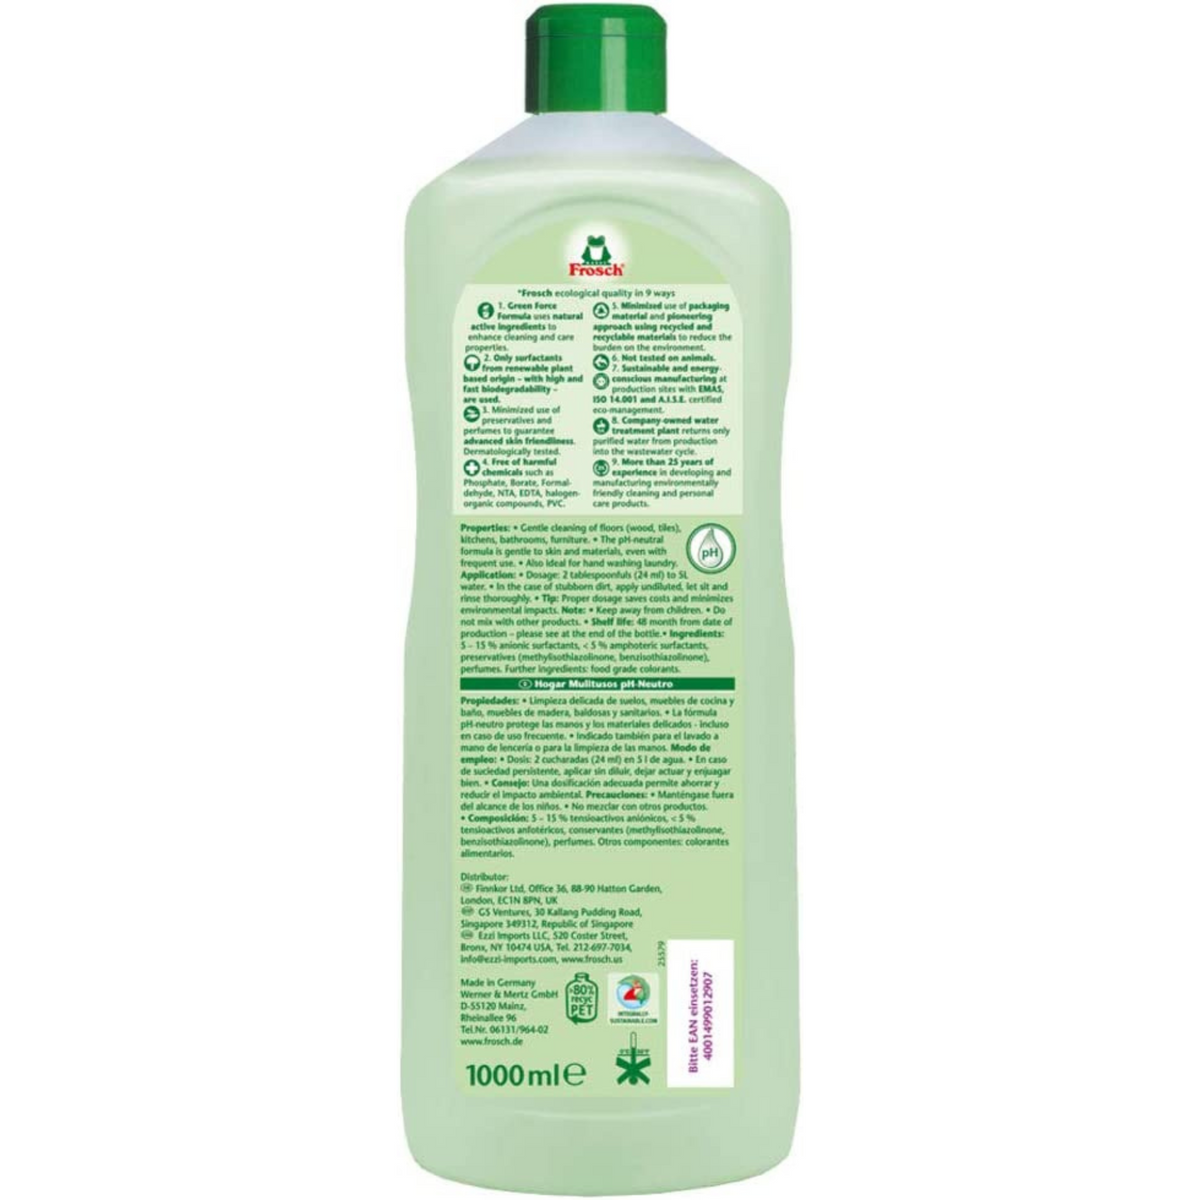 Frosch PH-Neutral Universal Cleaner (1000 ml) #10085897